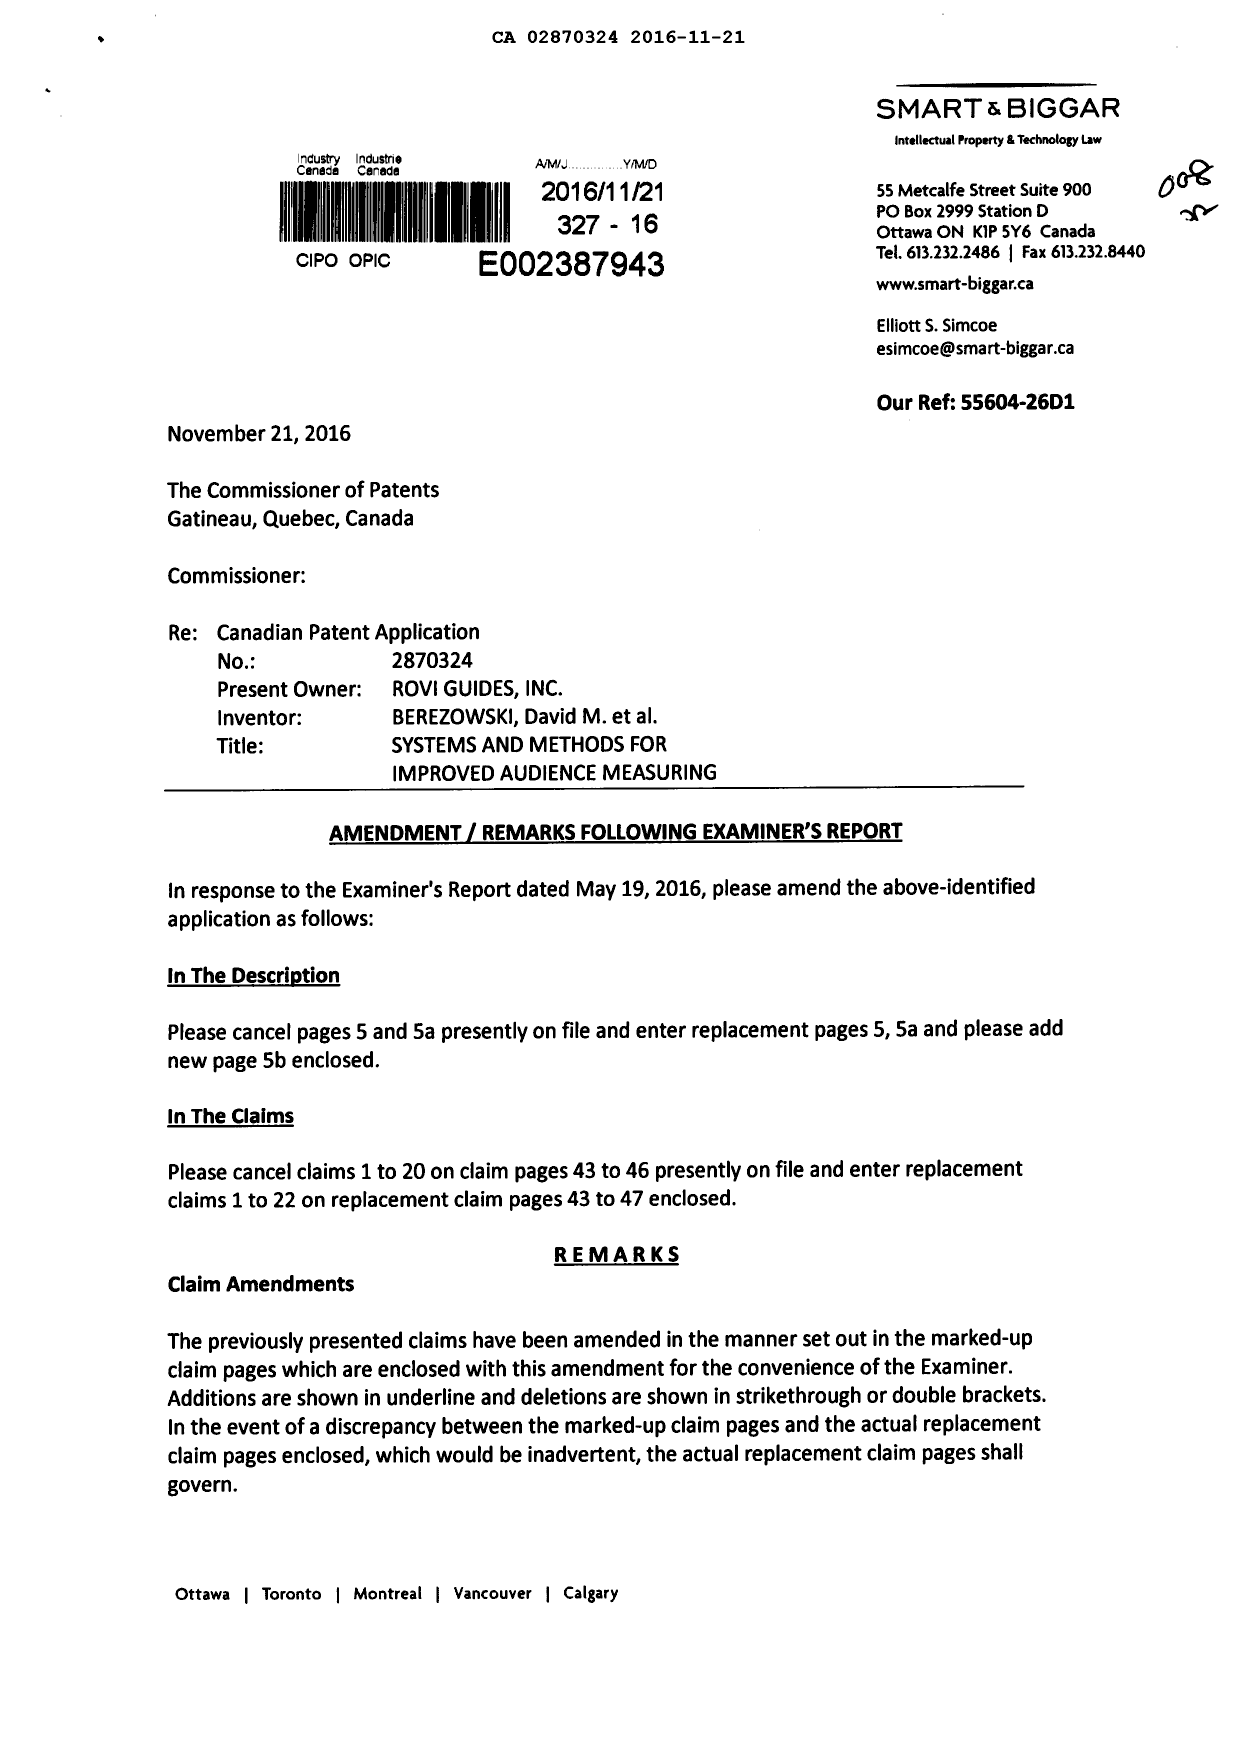 Canadian Patent Document 2870324. Amendment 20161121. Image 1 of 17